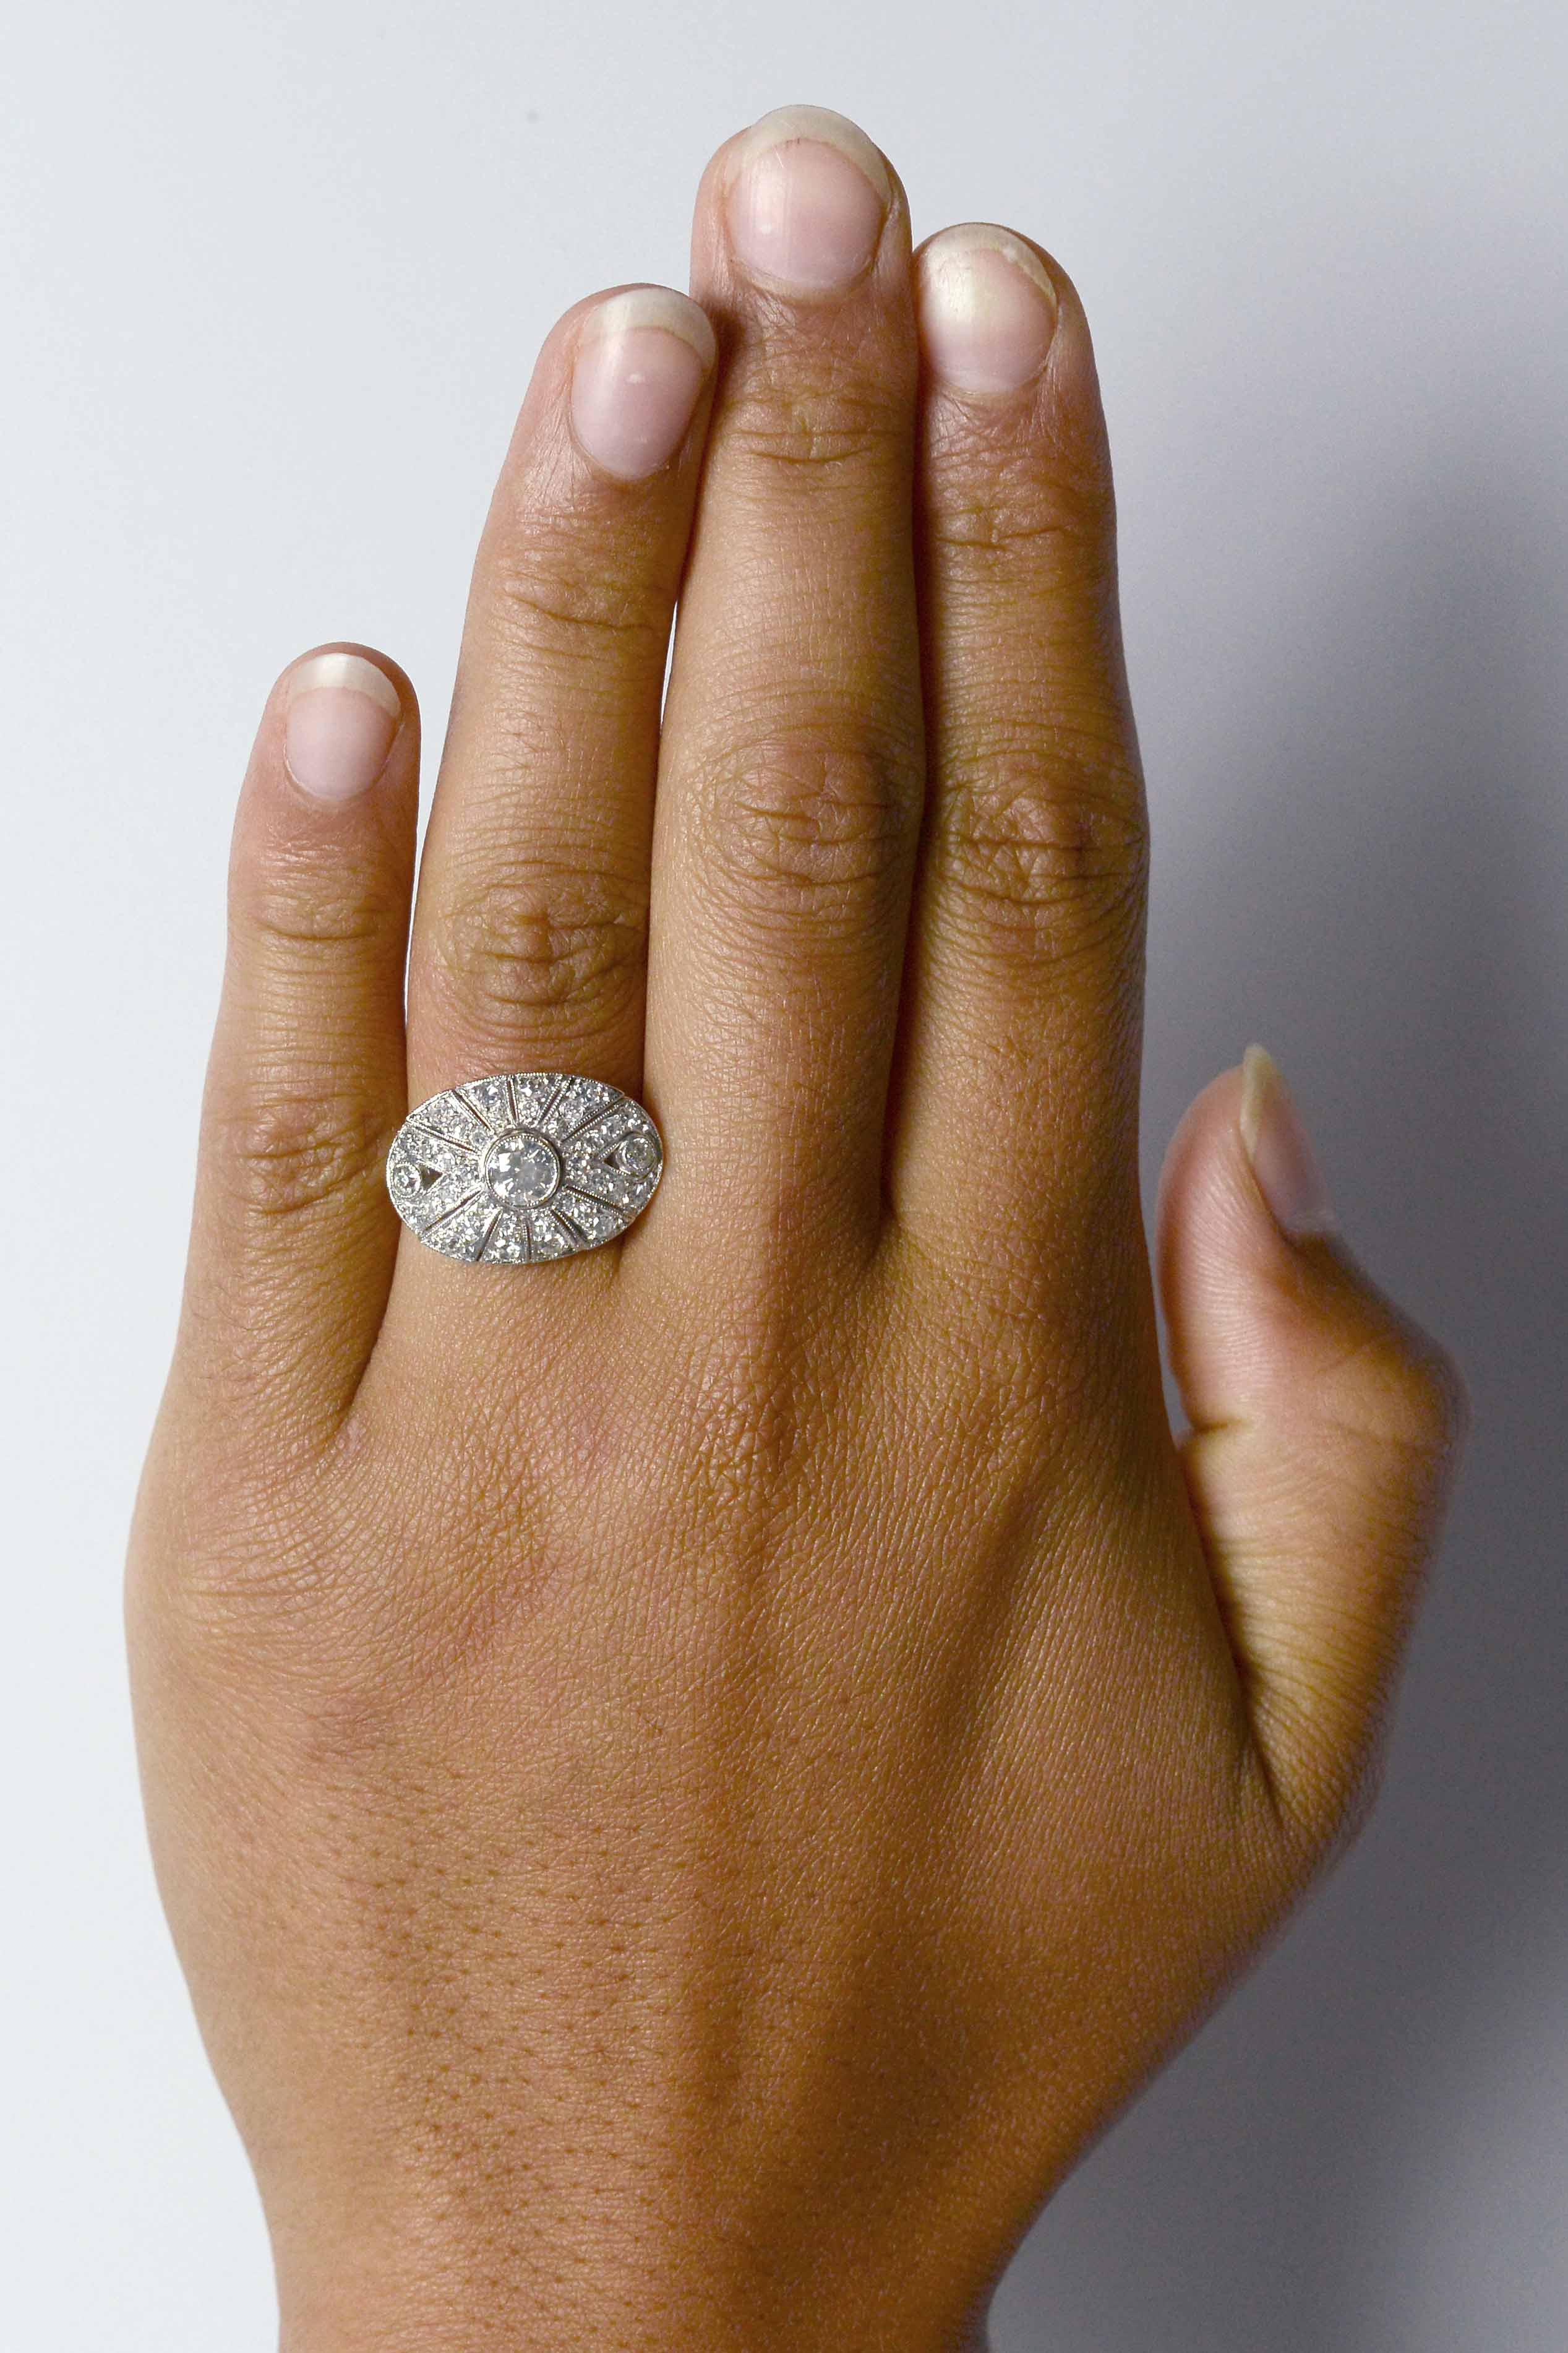 A third carat round brilliant diamond, oval shaped statement ring.